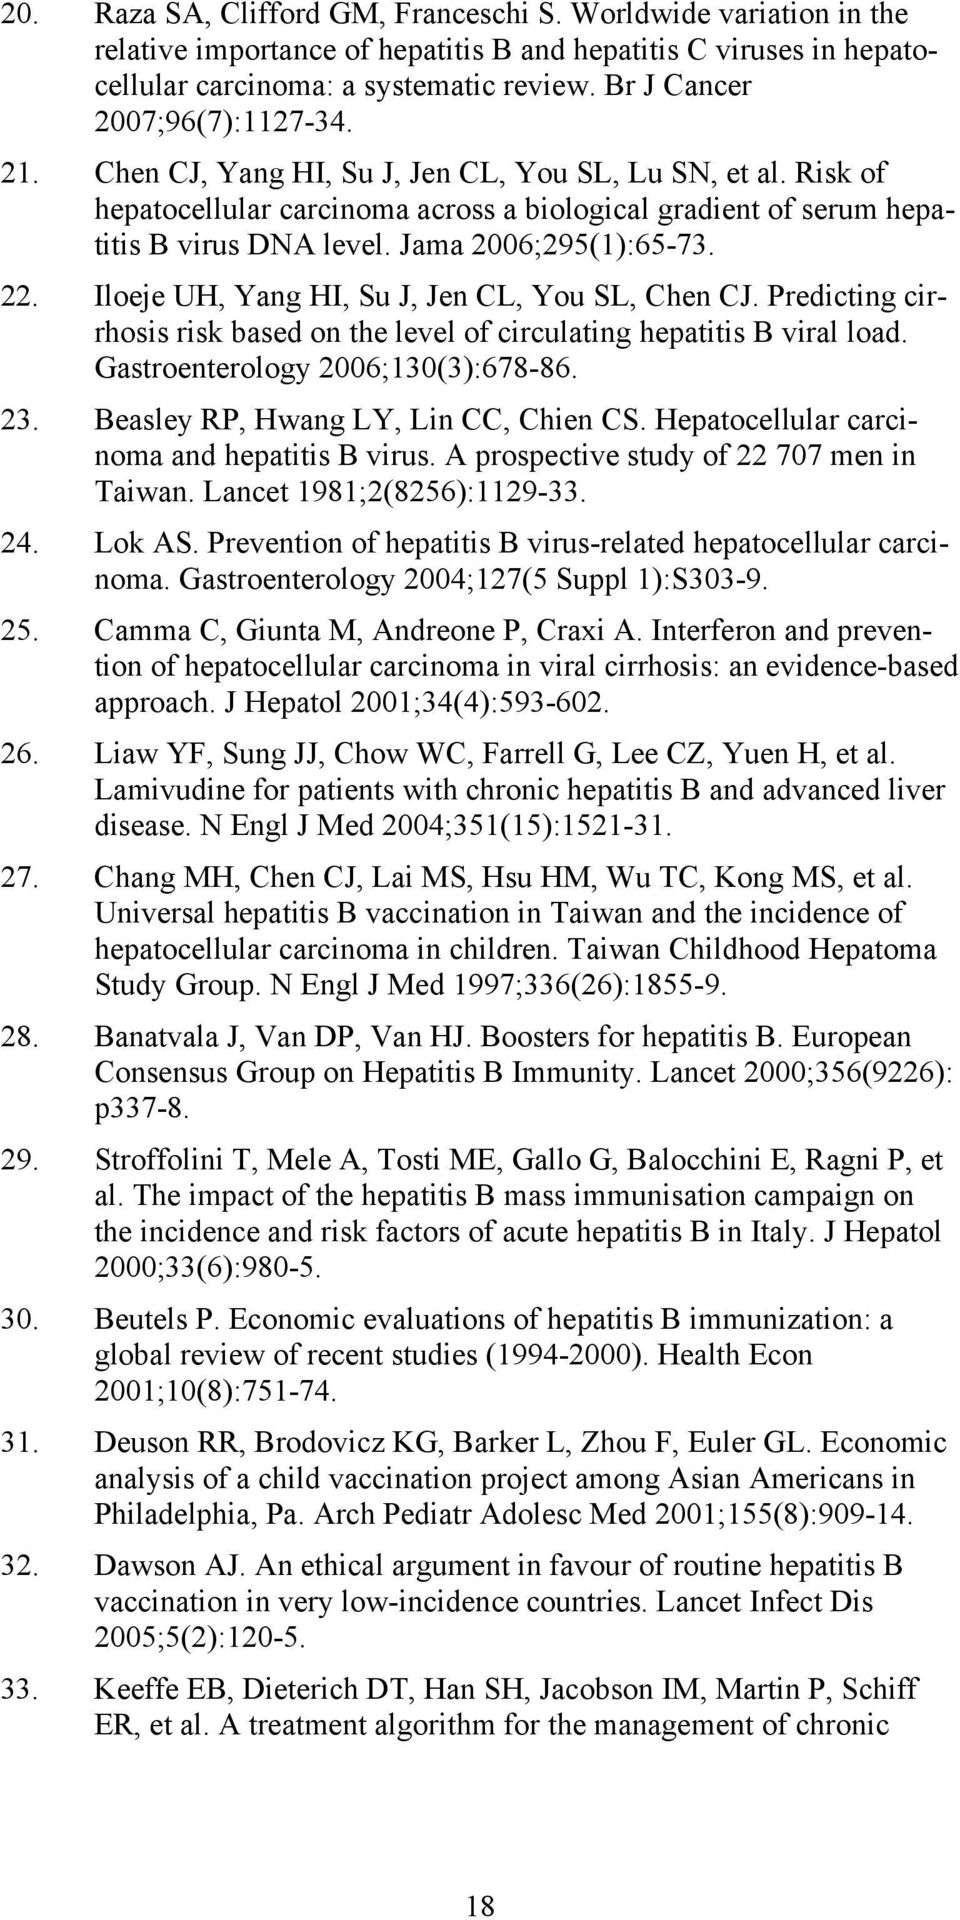 Jama 2006;295(1):65-73. 22. Iloeje UH, Yang HI, Su J, Jen CL, You SL, Chen CJ. Predicting cirrhosis risk based on the level of circulating hepatitis B viral load. Gastroenterology 2006;130(3):678-86.